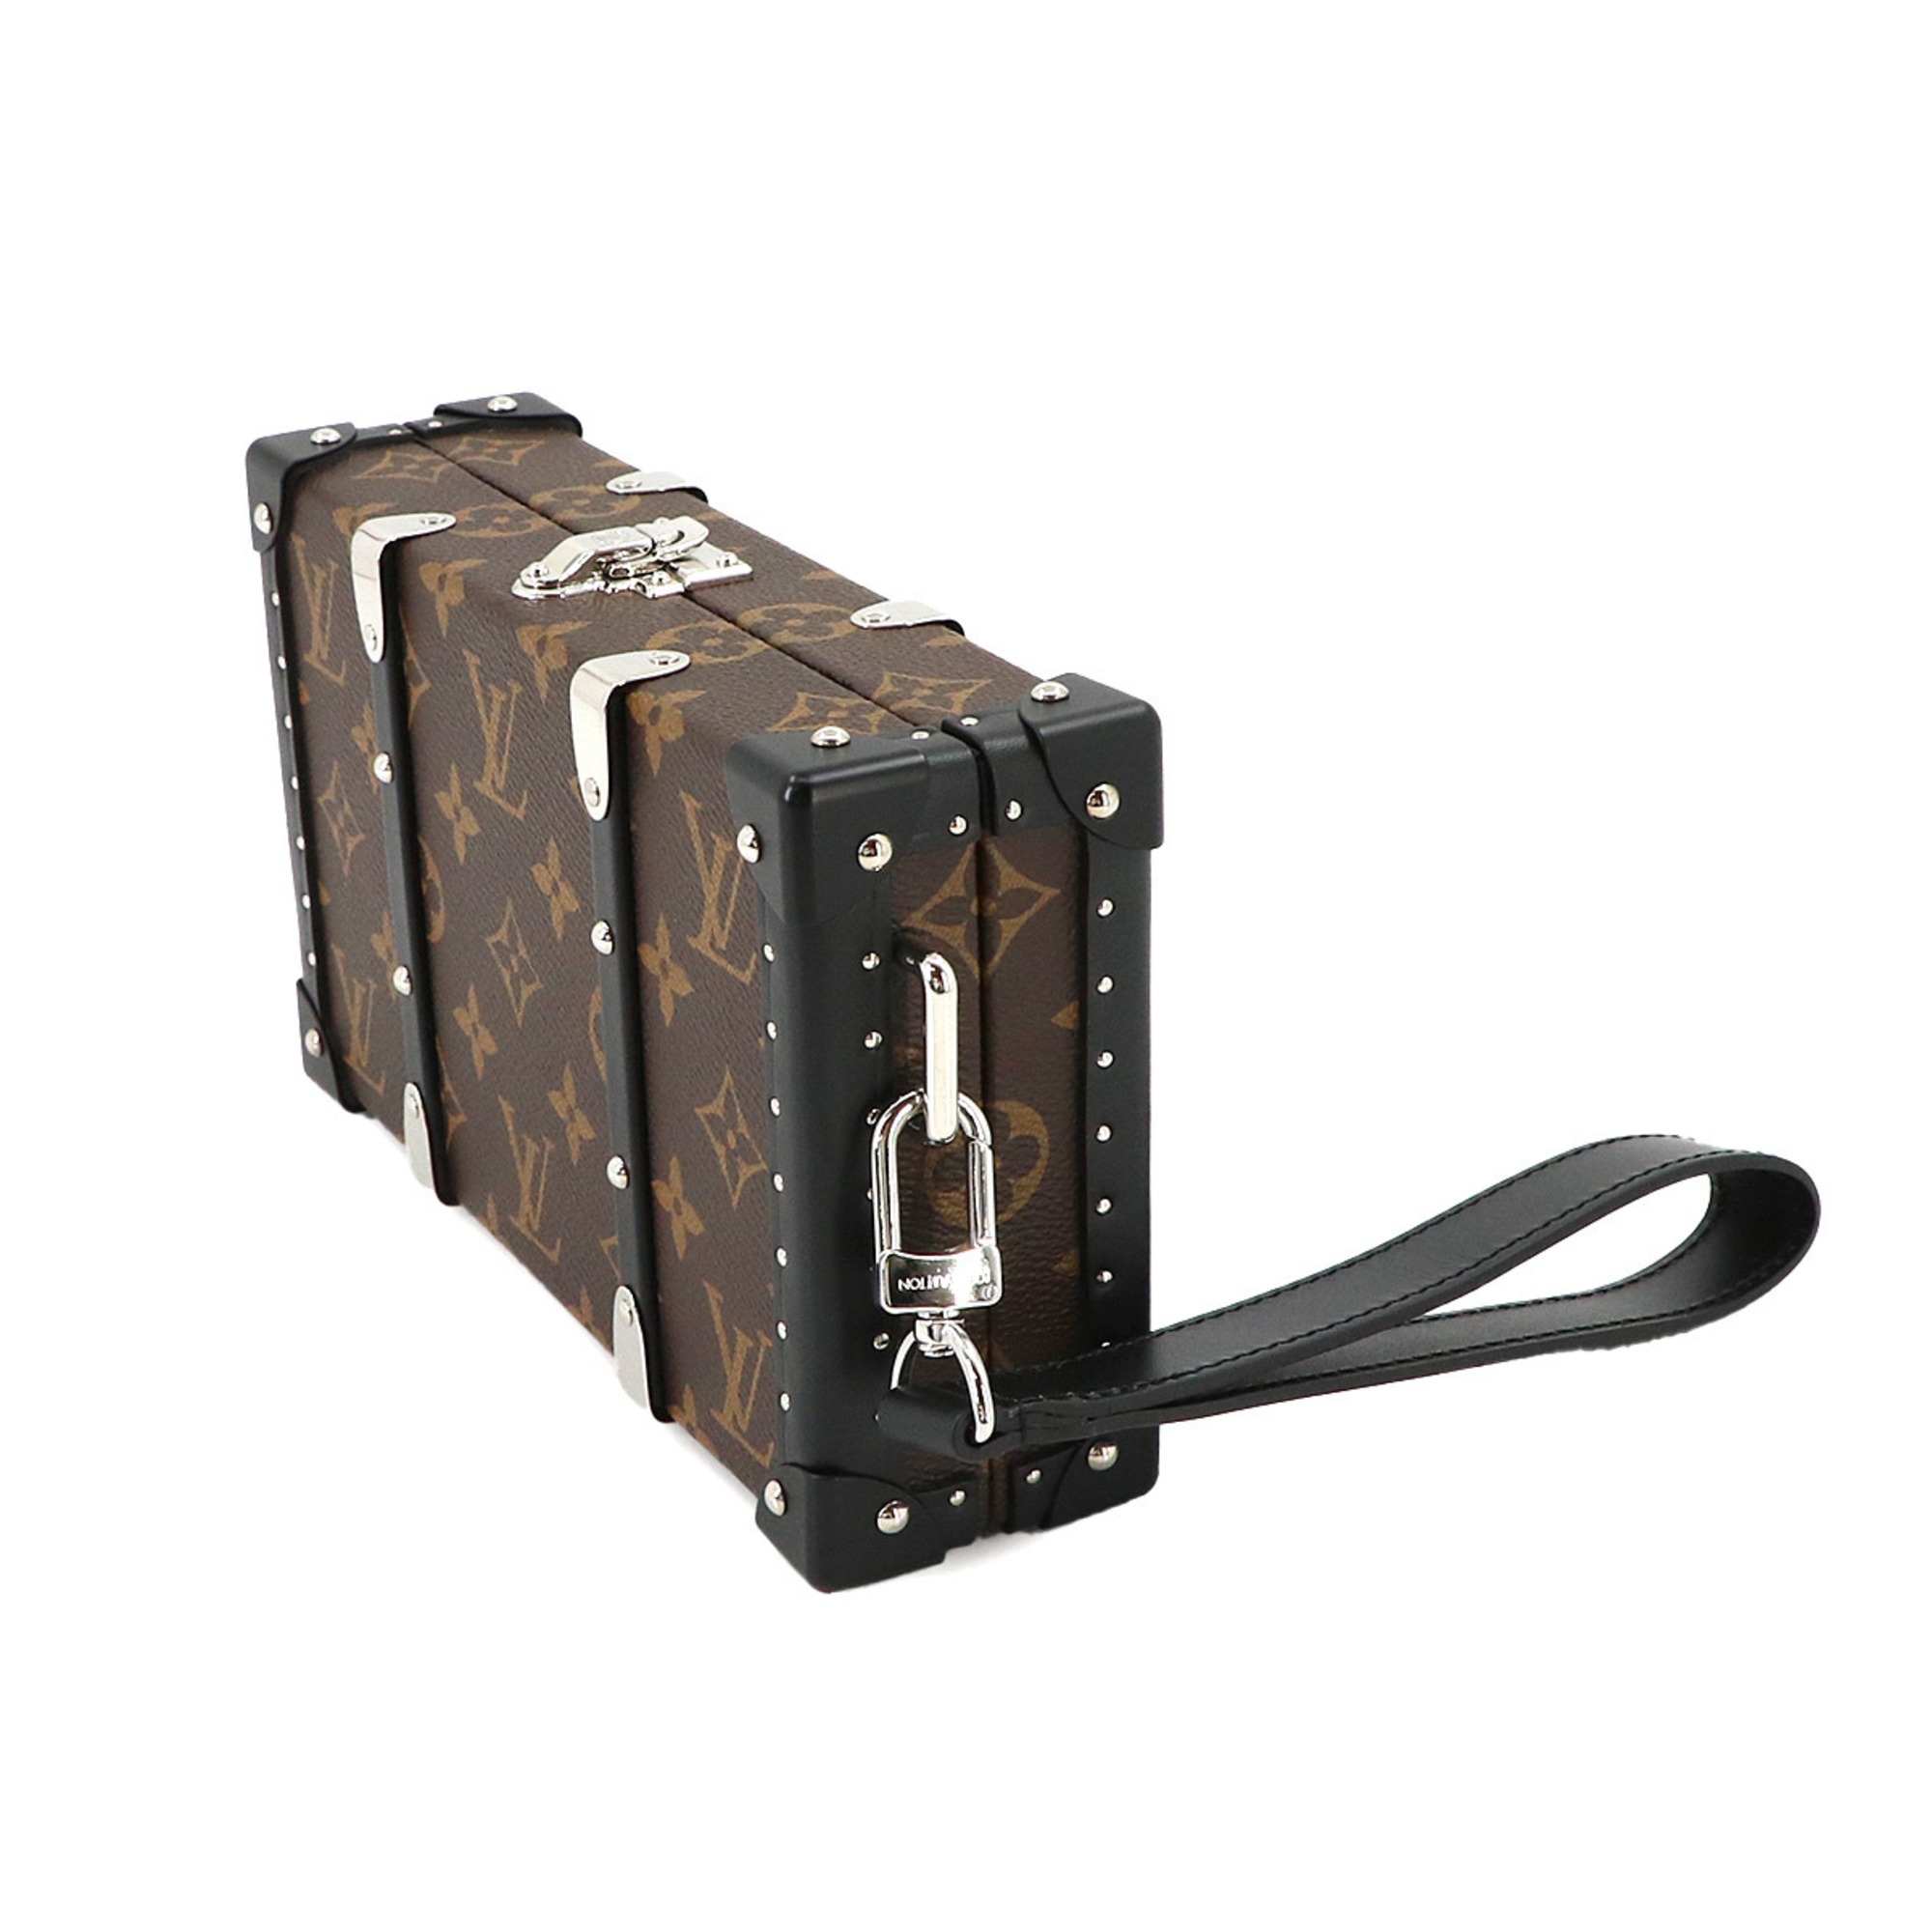 LOUIS VUITTON Monogram Macassar Wallet Trunk Clutch Bag Leather Brown Black M20250